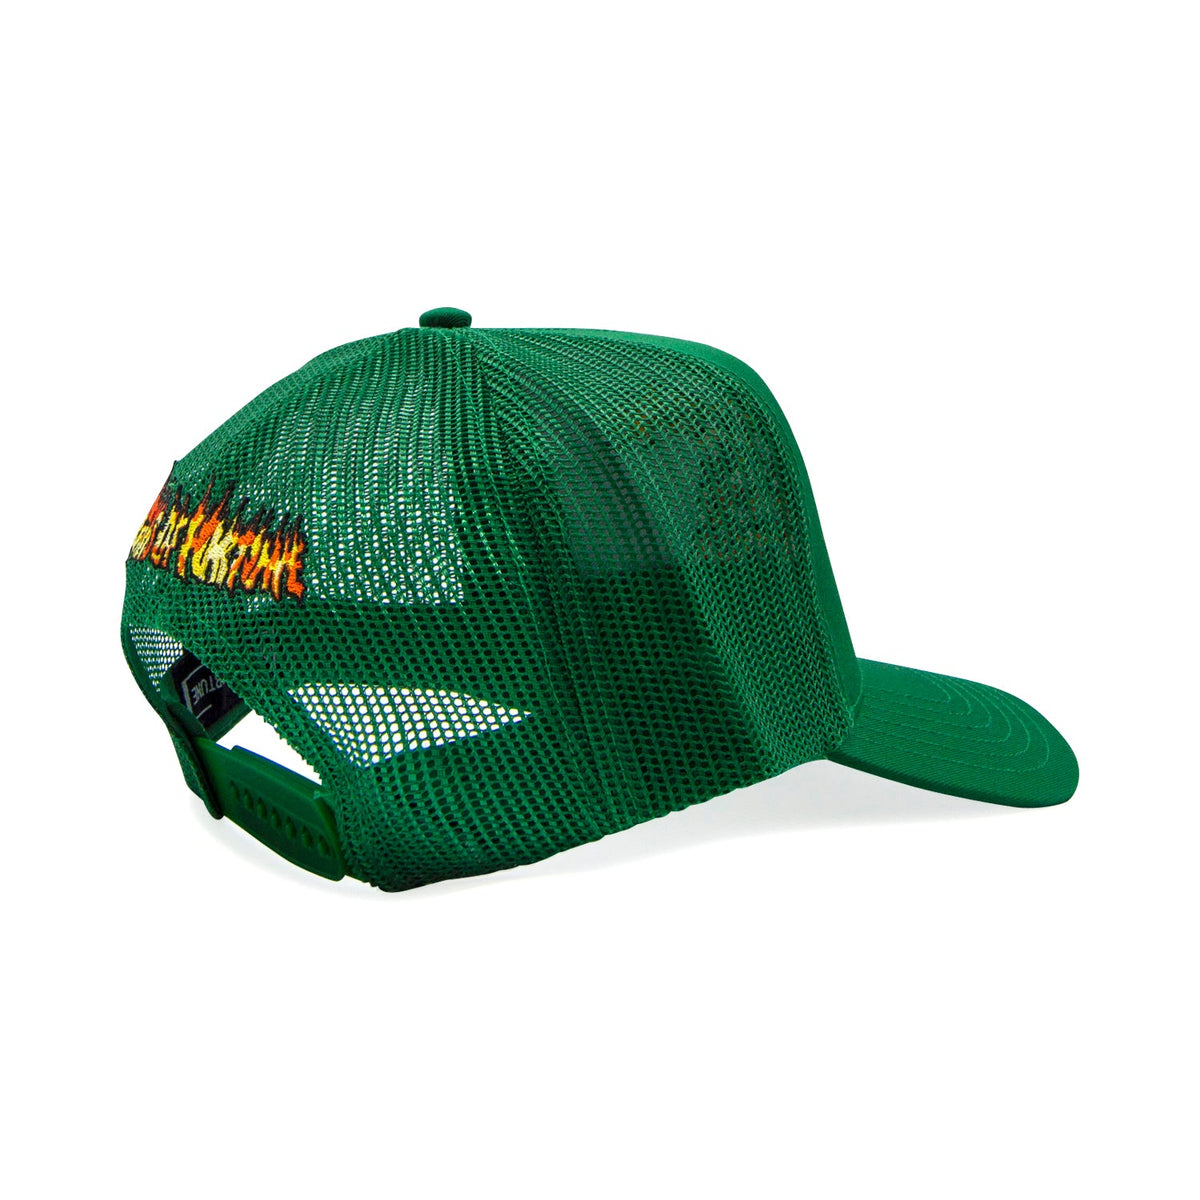 1 of 1  Bad To The Bone Trucker Hat | Green